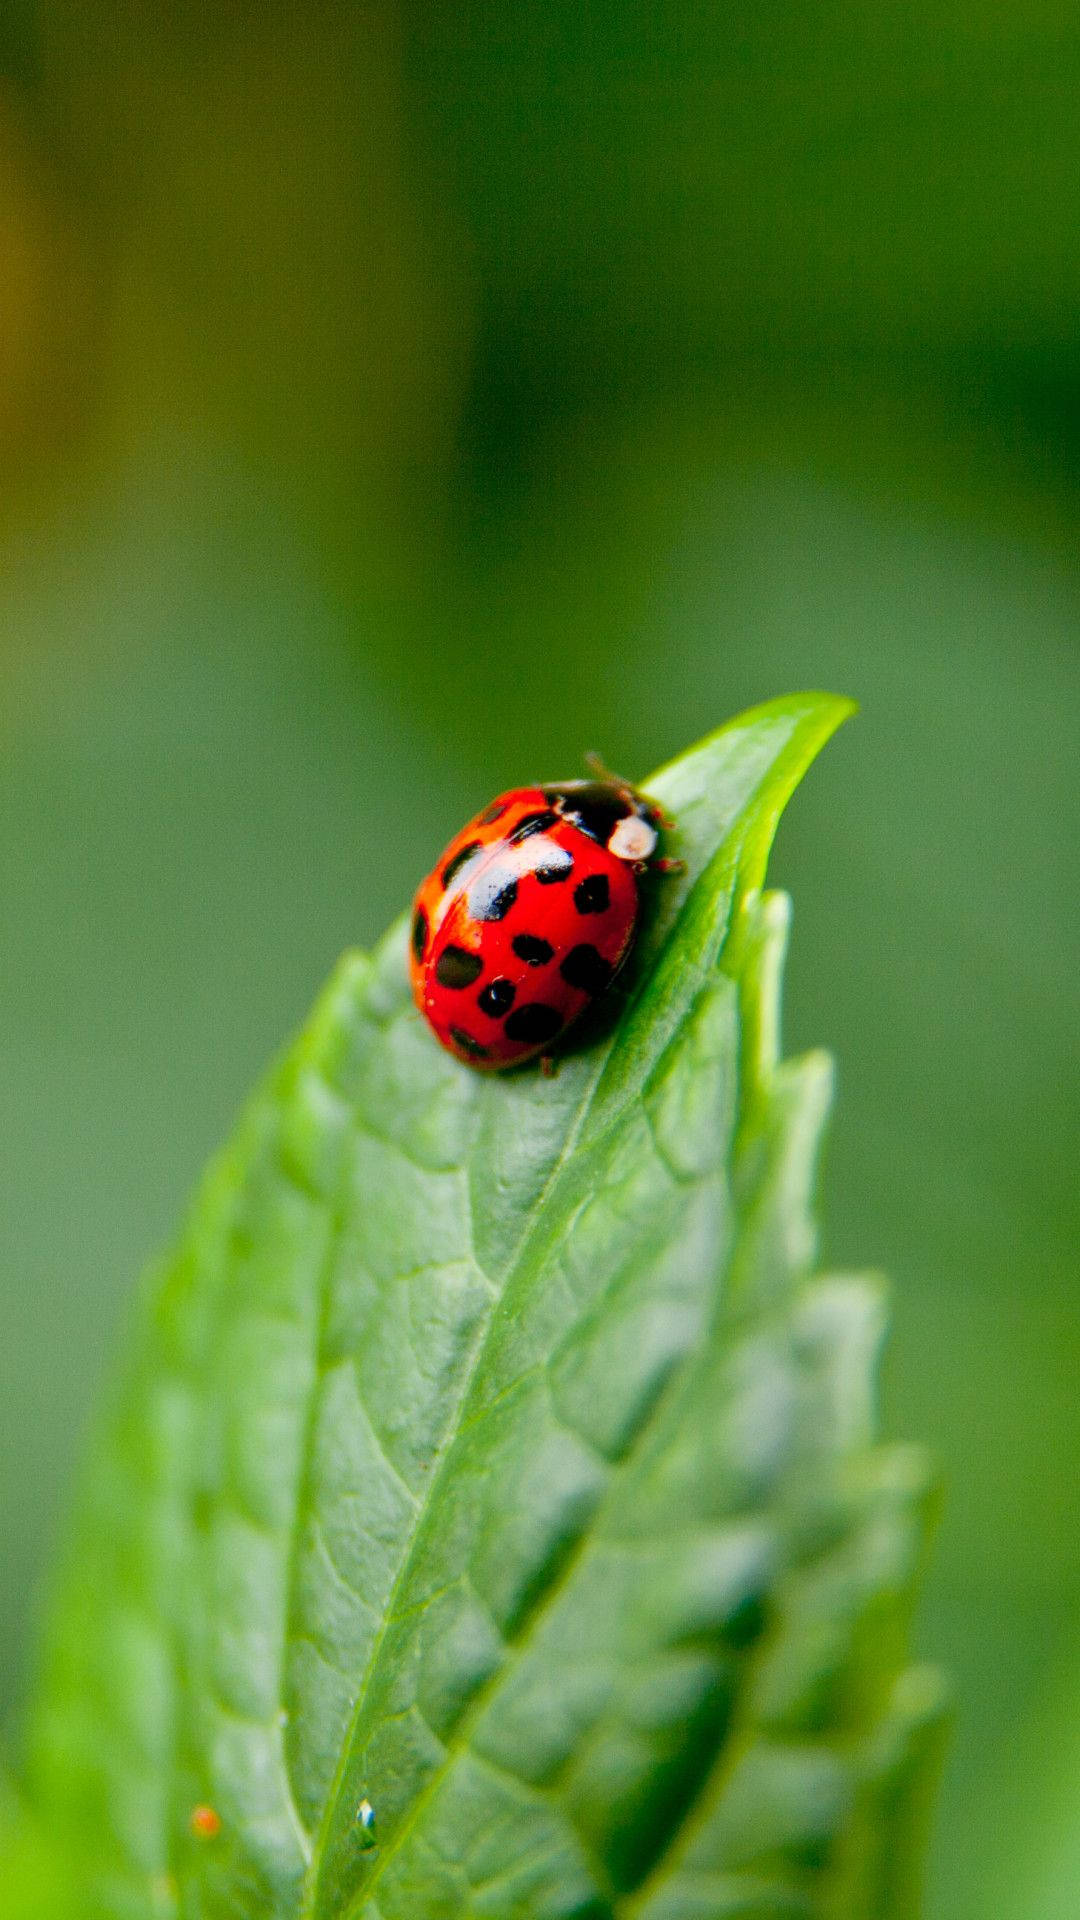 Ladybug Munching On A Broad Leaf